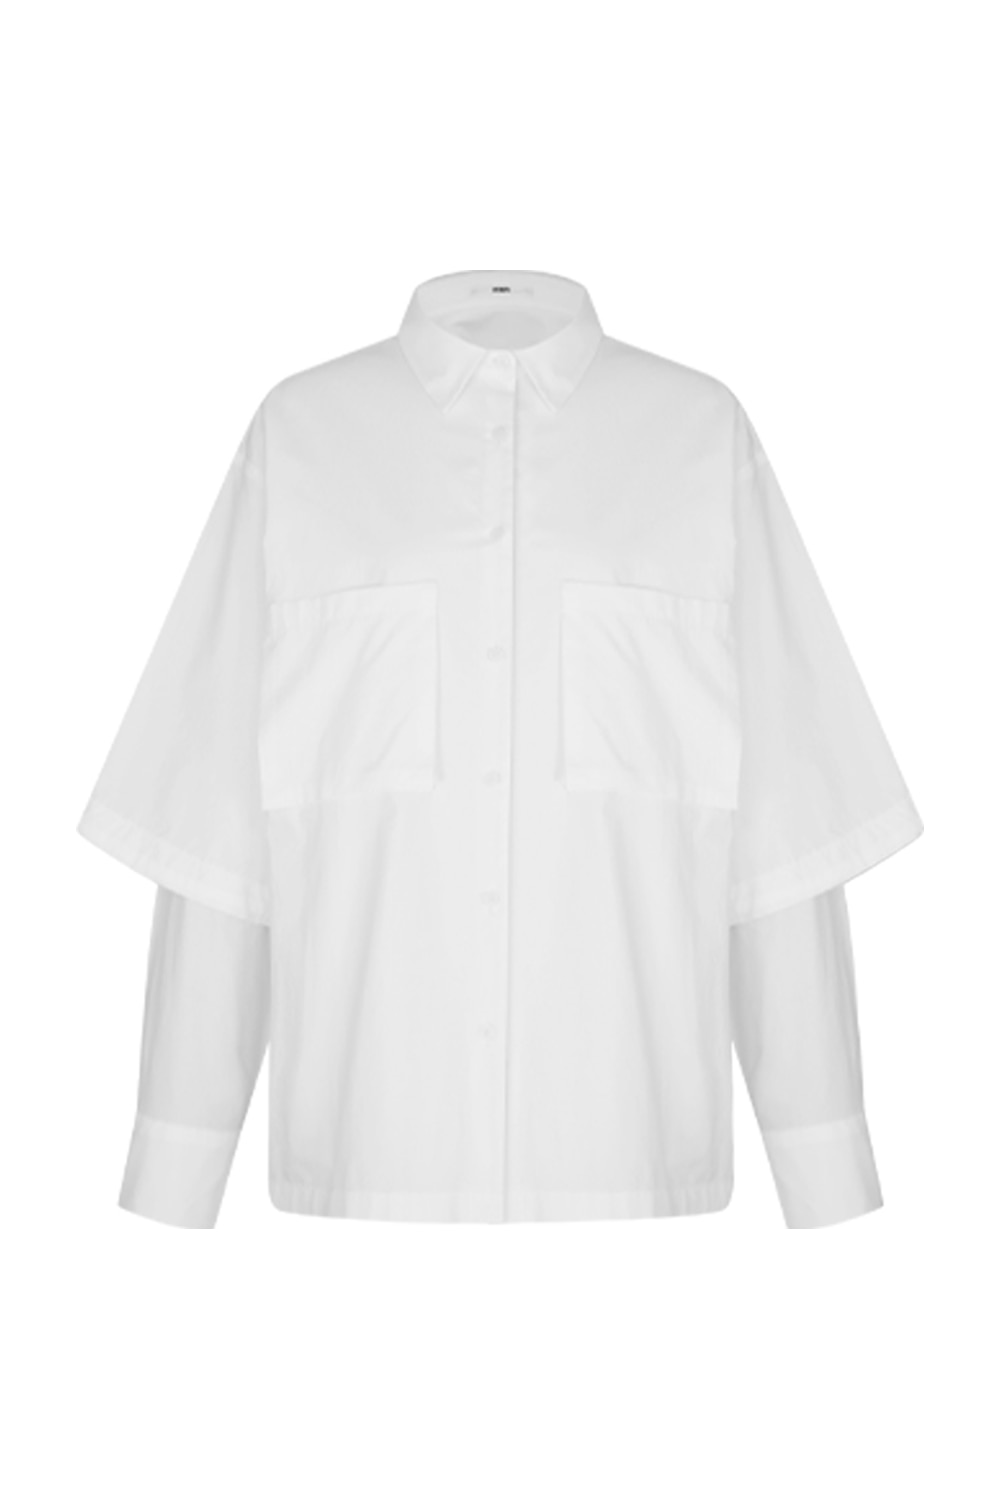 Out pocket layered sleeve shirt_White